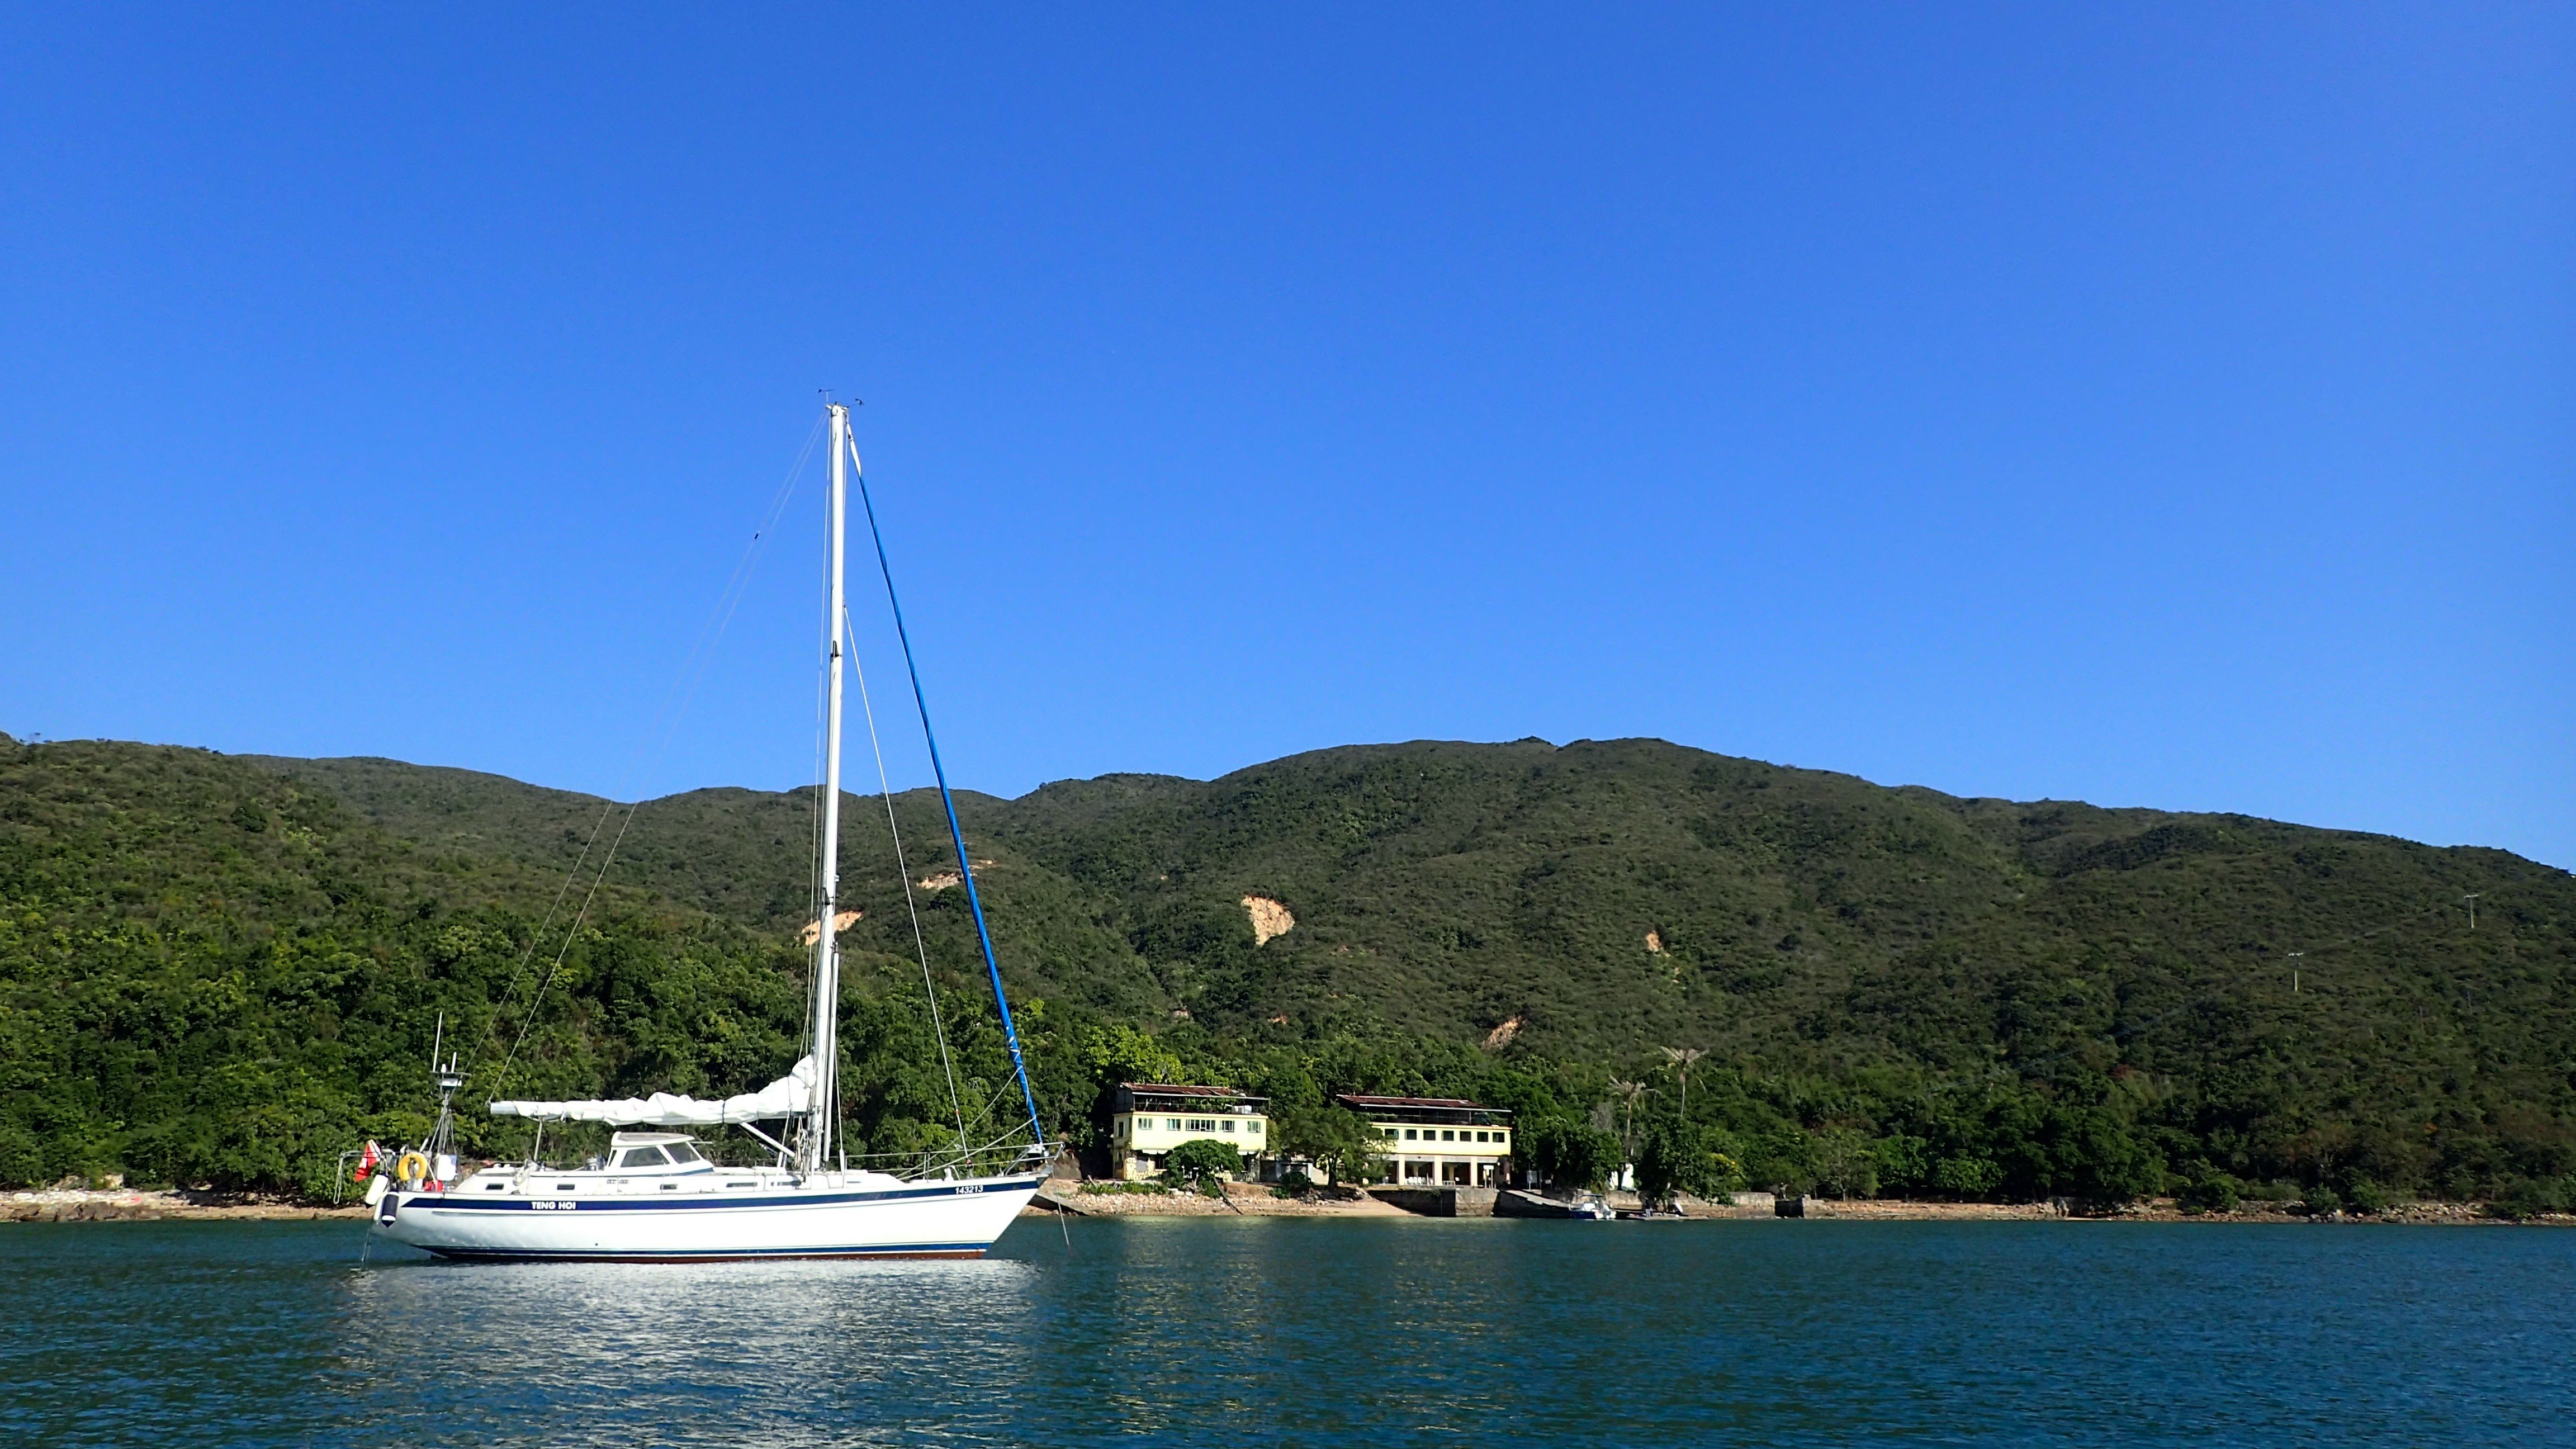 The Teng Hoi yacht moored in Snake Bay (Tai She Wan). Photo: Cameron Dueck